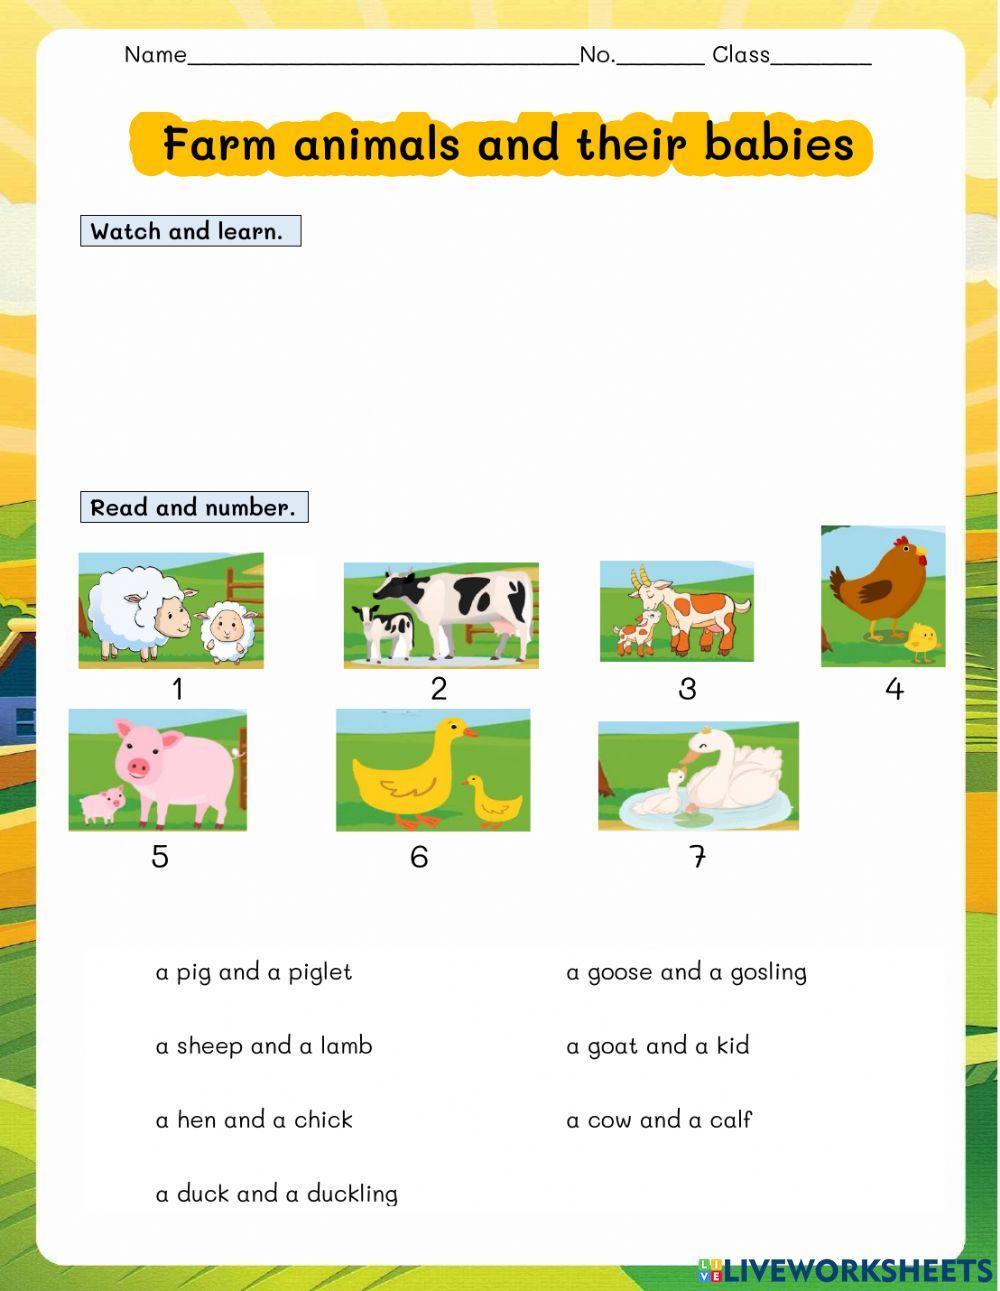 Farm animals and their babies